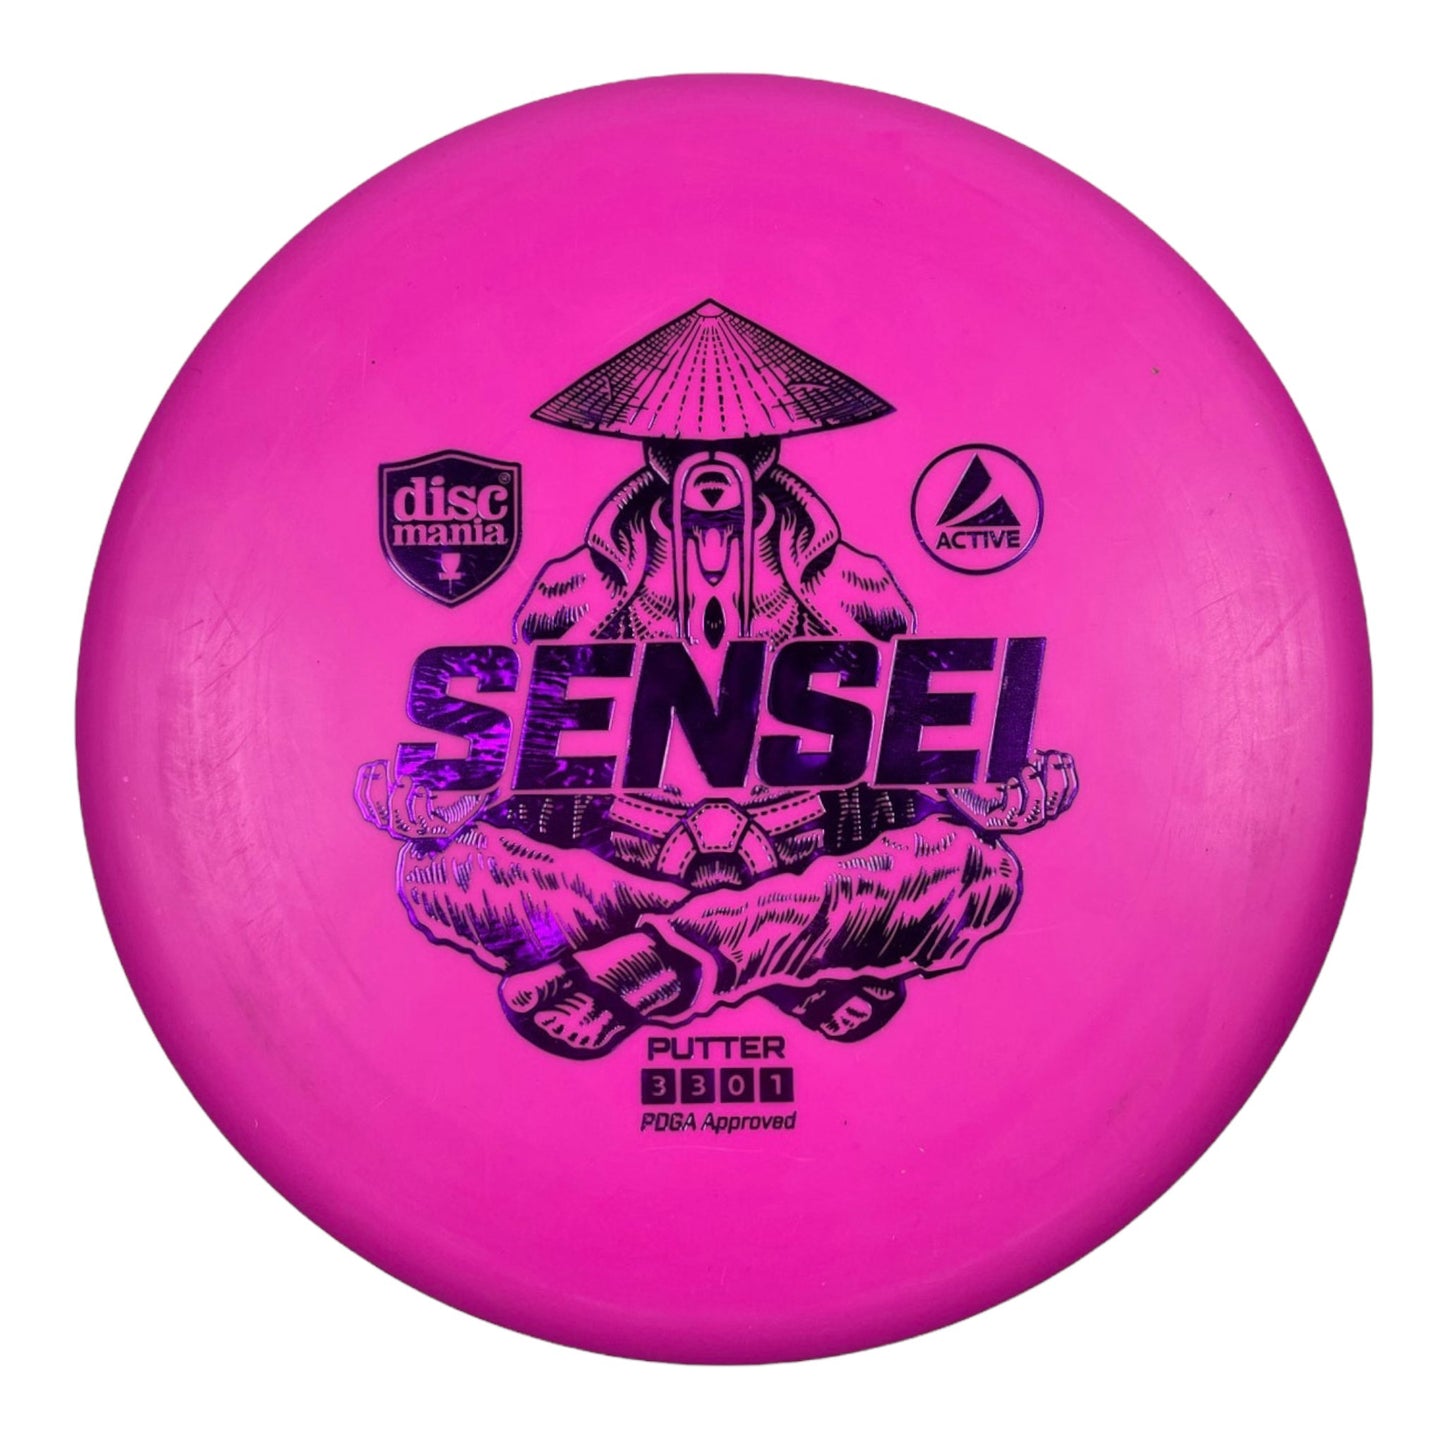 Discmania Sensei | Active | Pink/Purple 165g Disc Golf